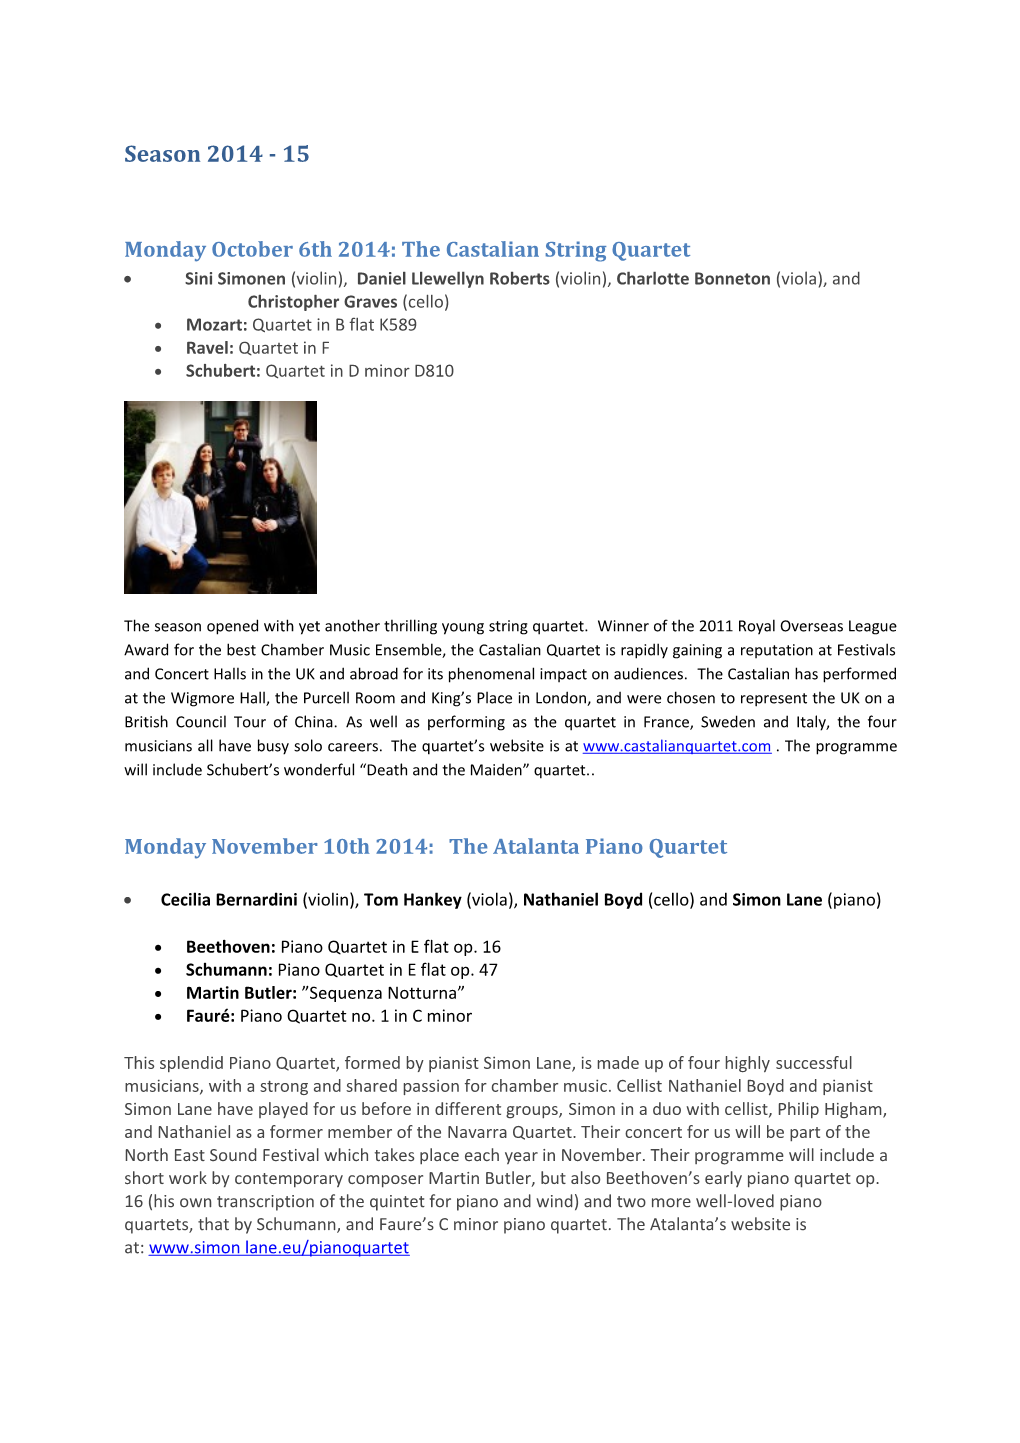 Monday October 6Th 2014:The Castalian String Quartet